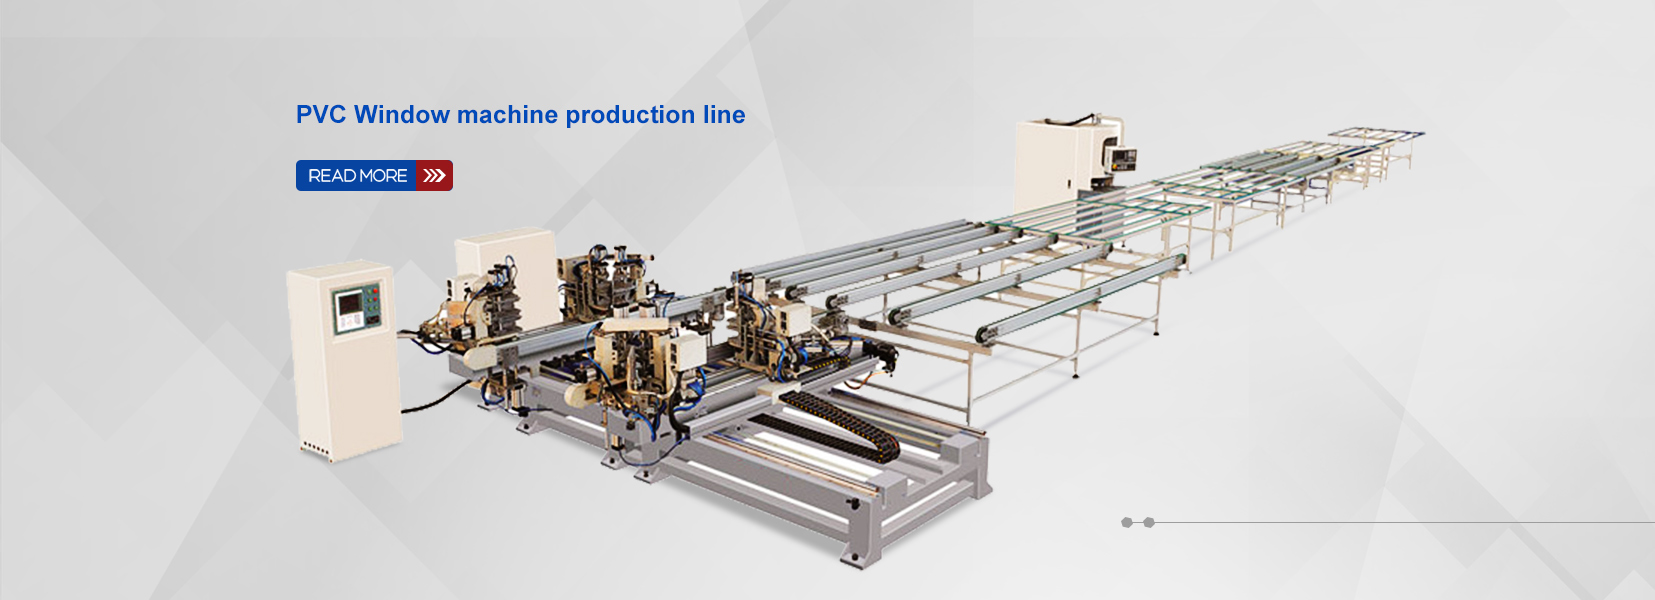 PVC Window machine production line